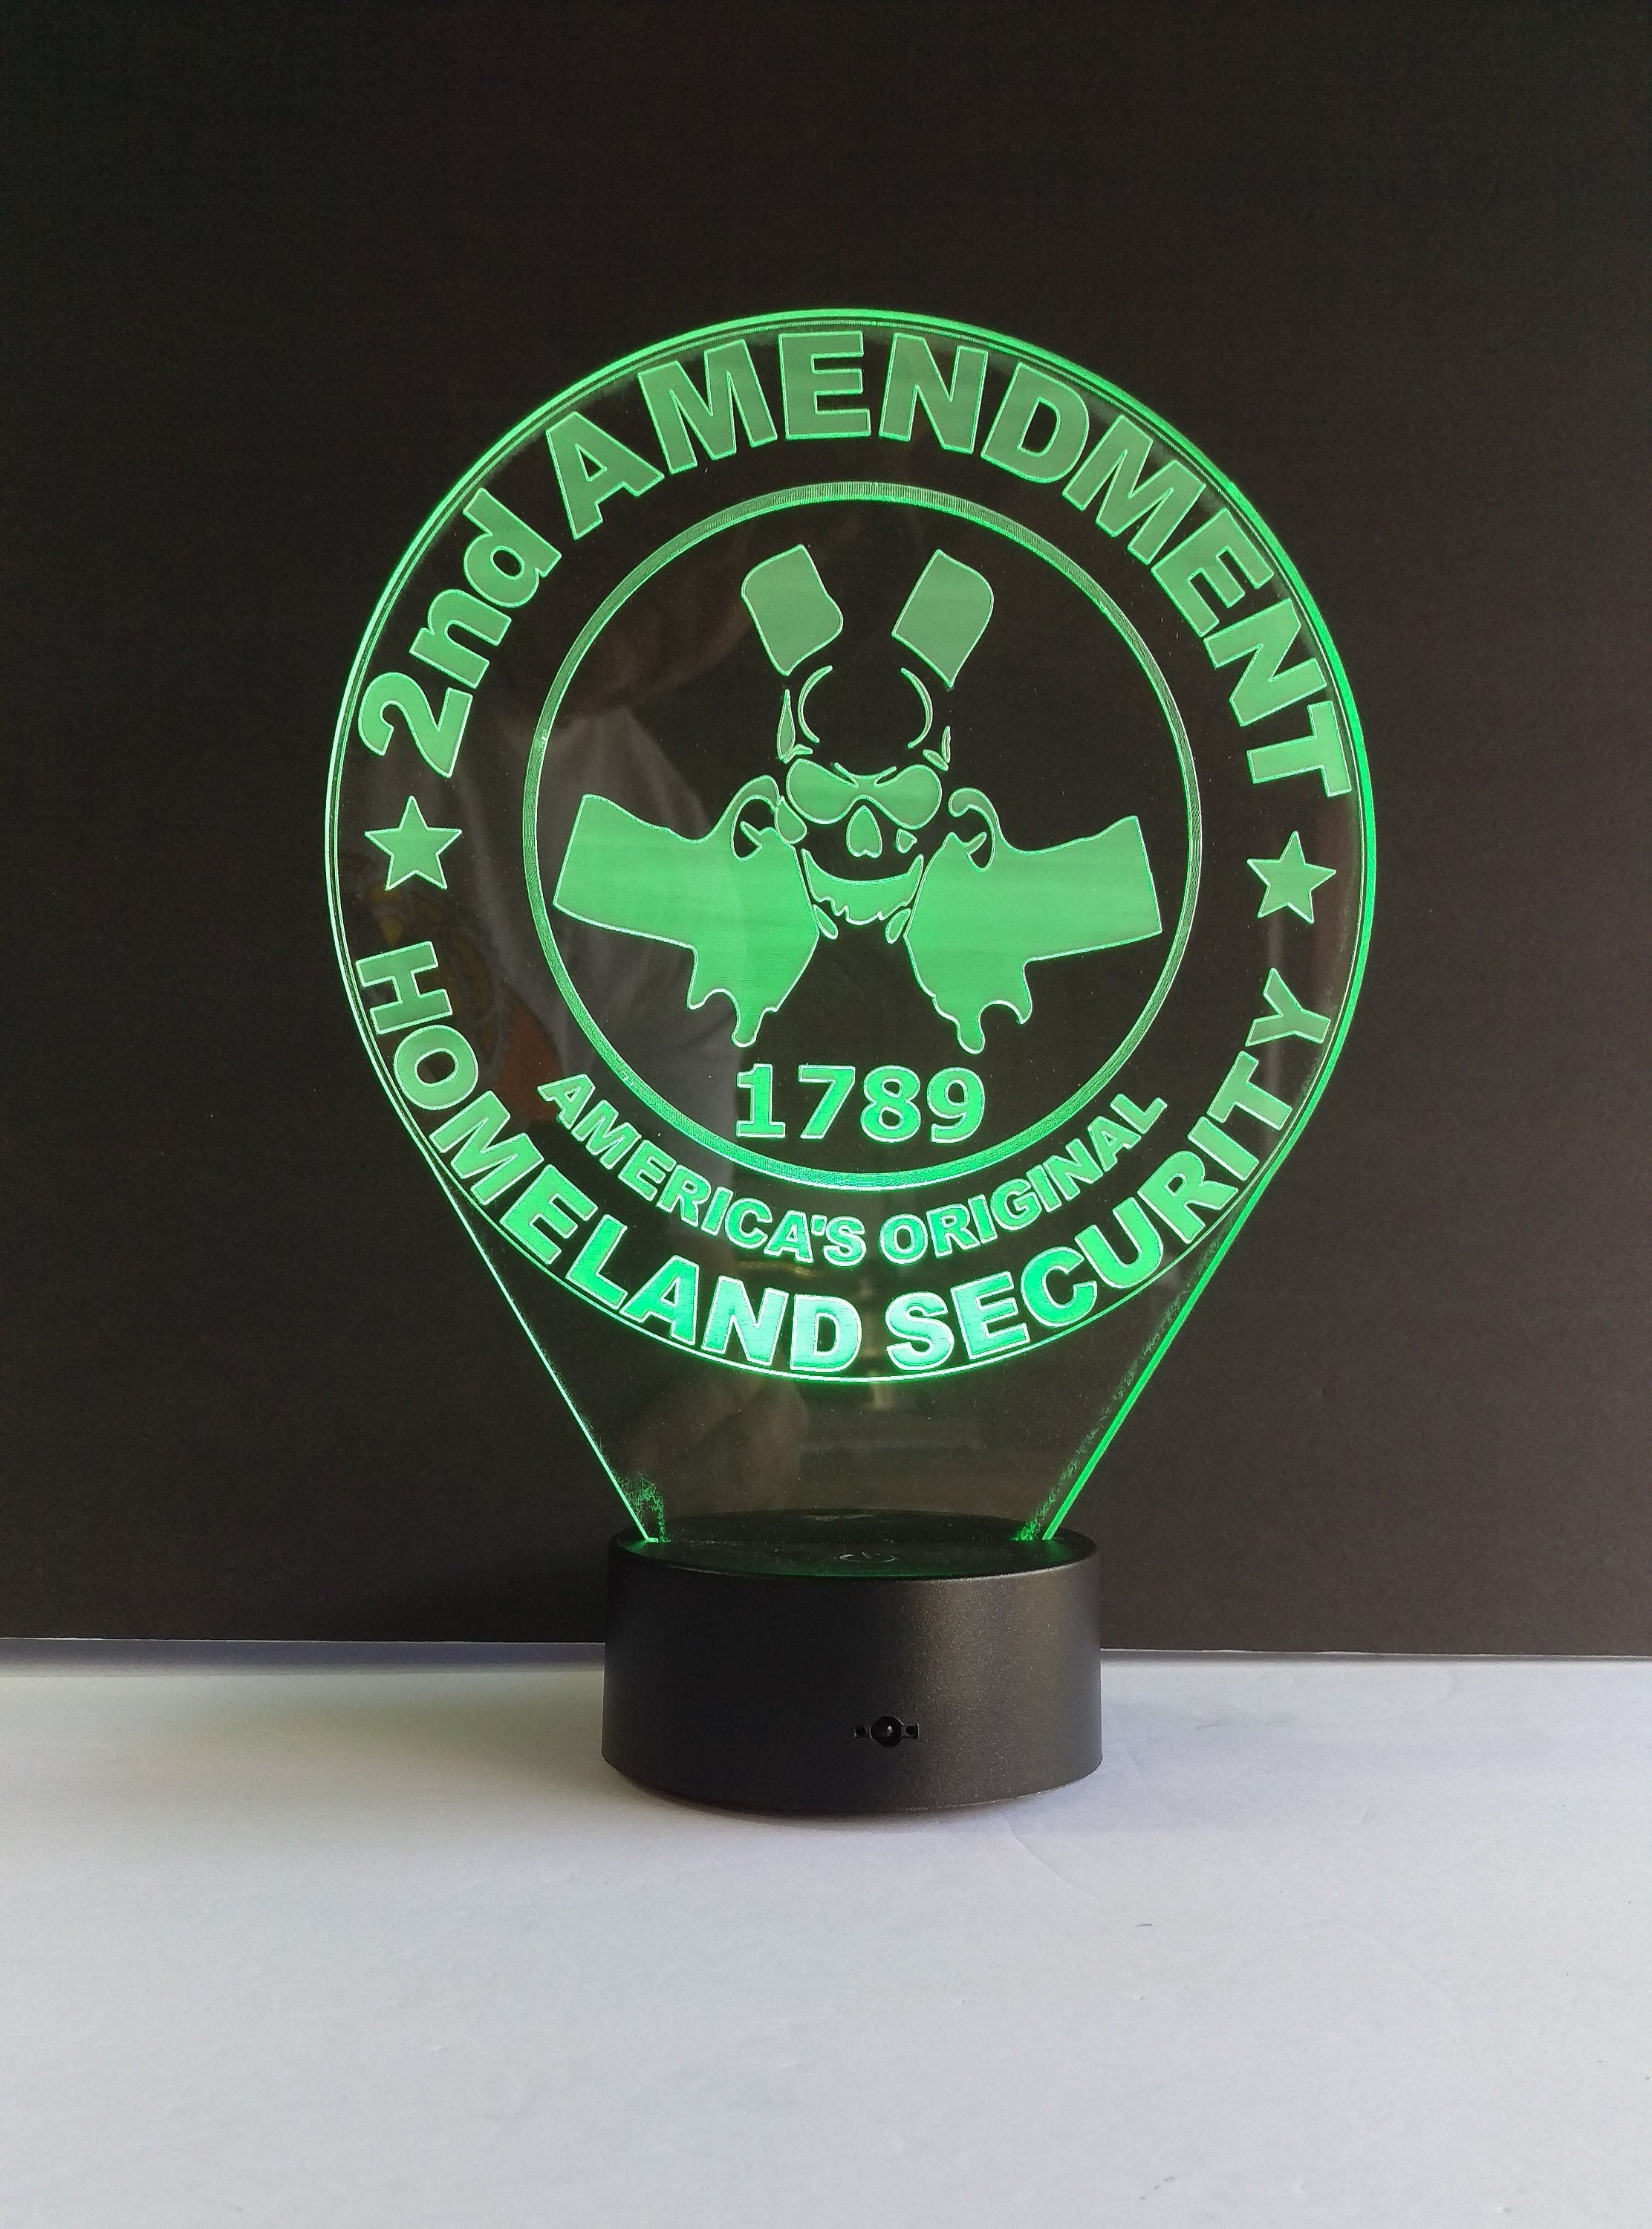 Awesome "2nd Amendment America's Original Homeland Security" LED Lamp (1158) - FREE SHIPPING!